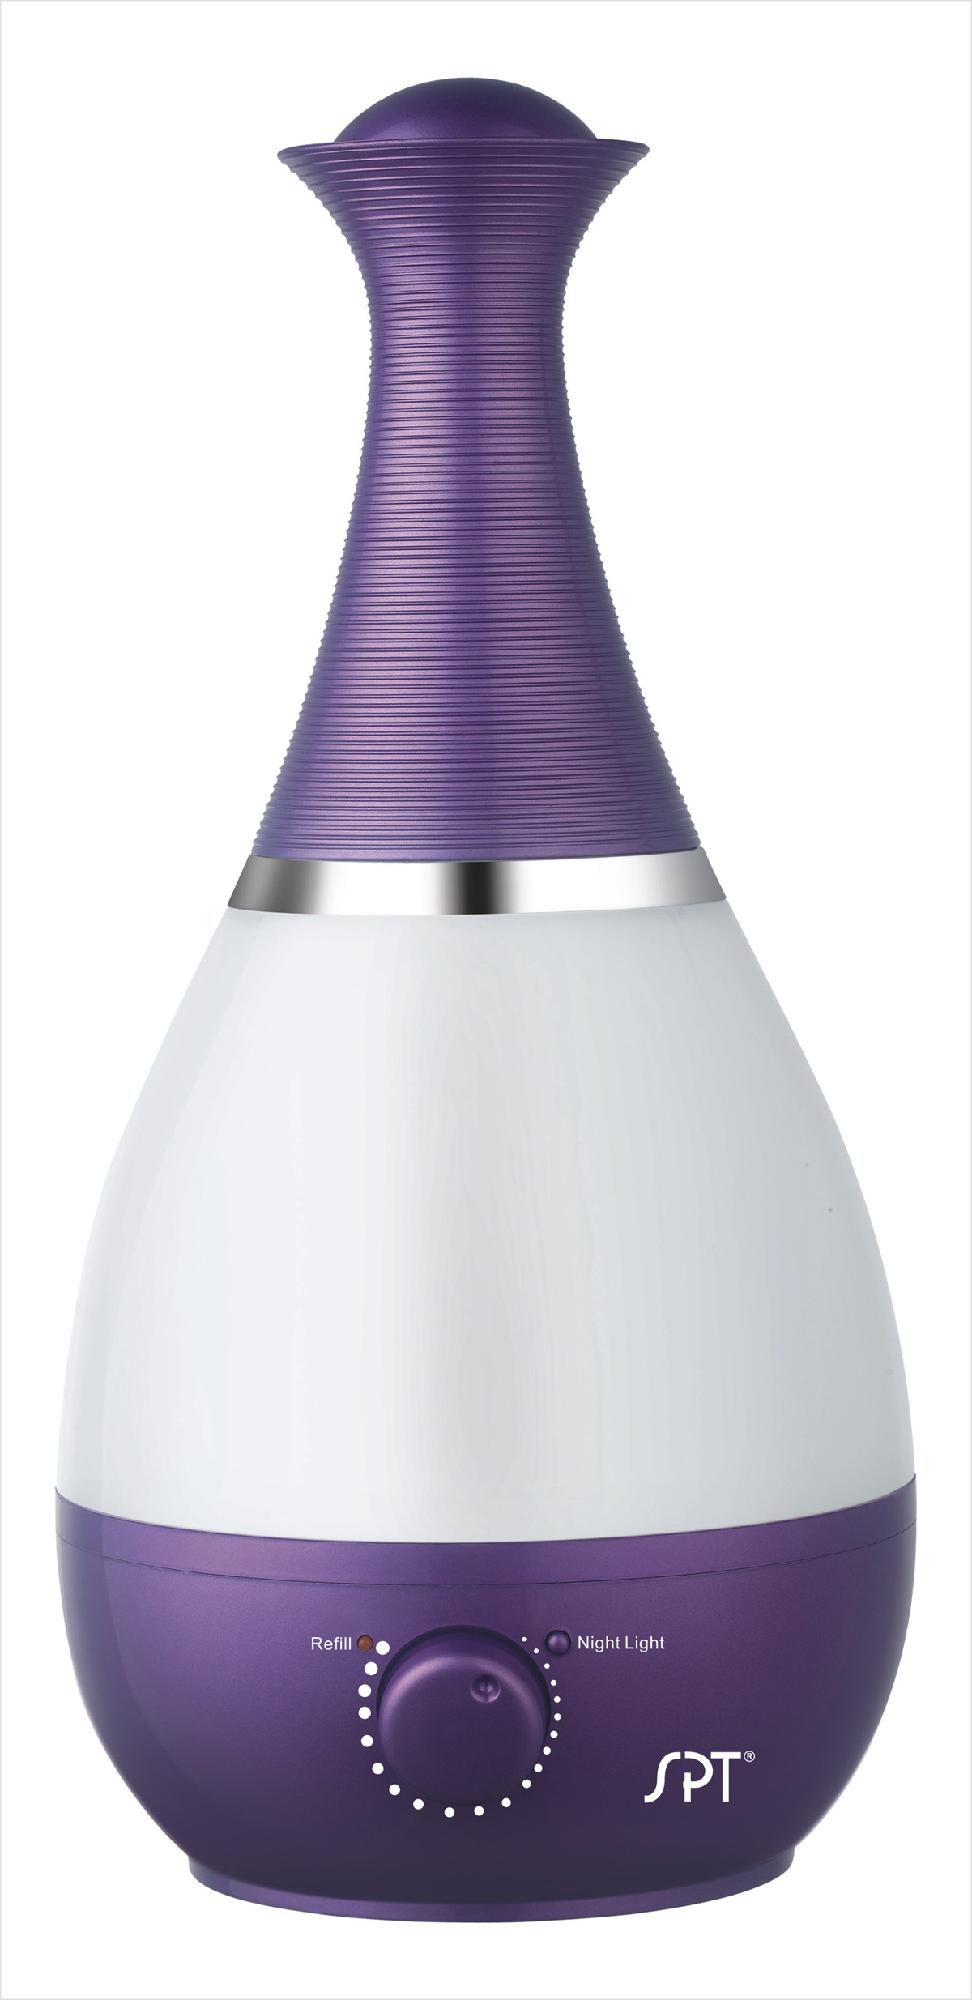 SPT SU-2550V  Ultrasonic Humidifier with Frangrance Diffuser (Violet)